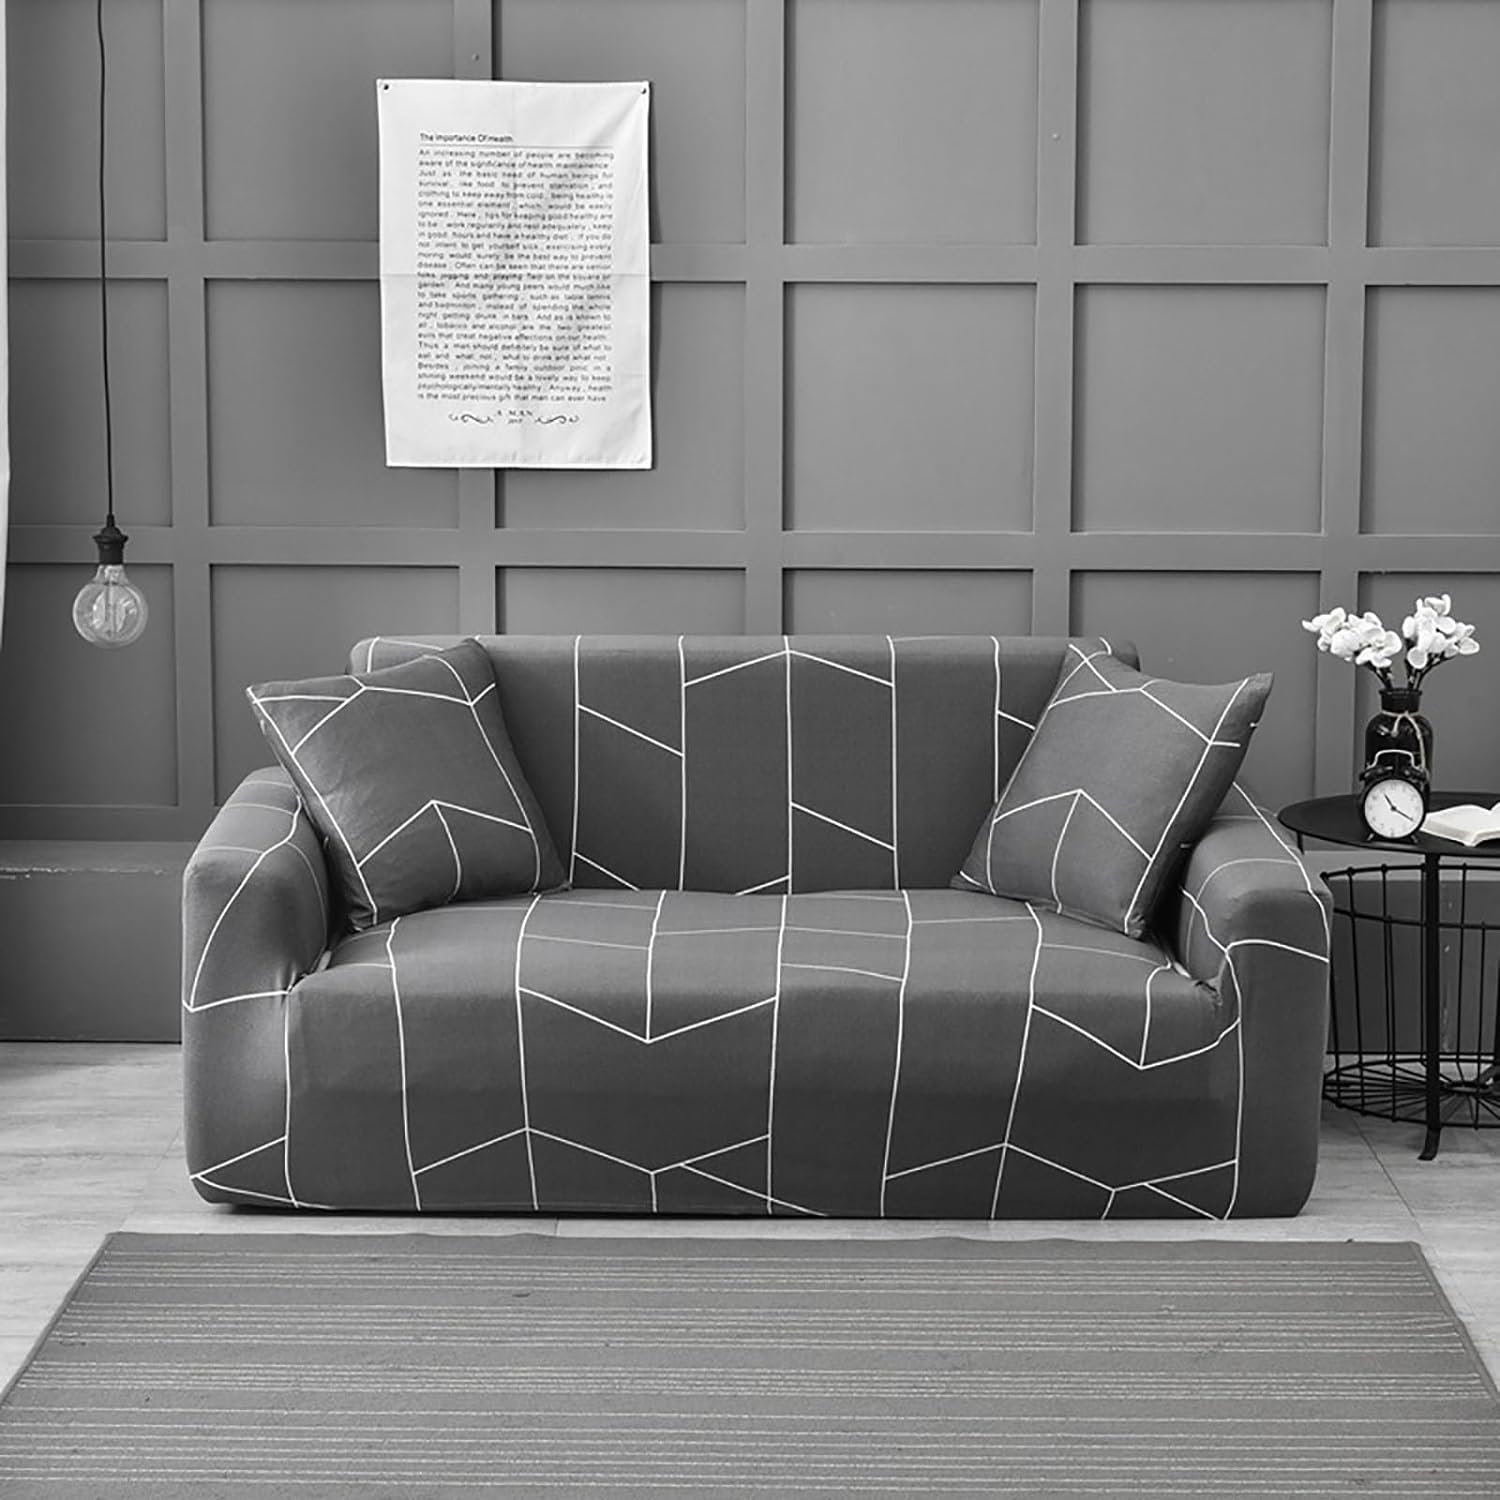 Trendize Exclusive Stretchable Sofa Cover - Hexa Grey